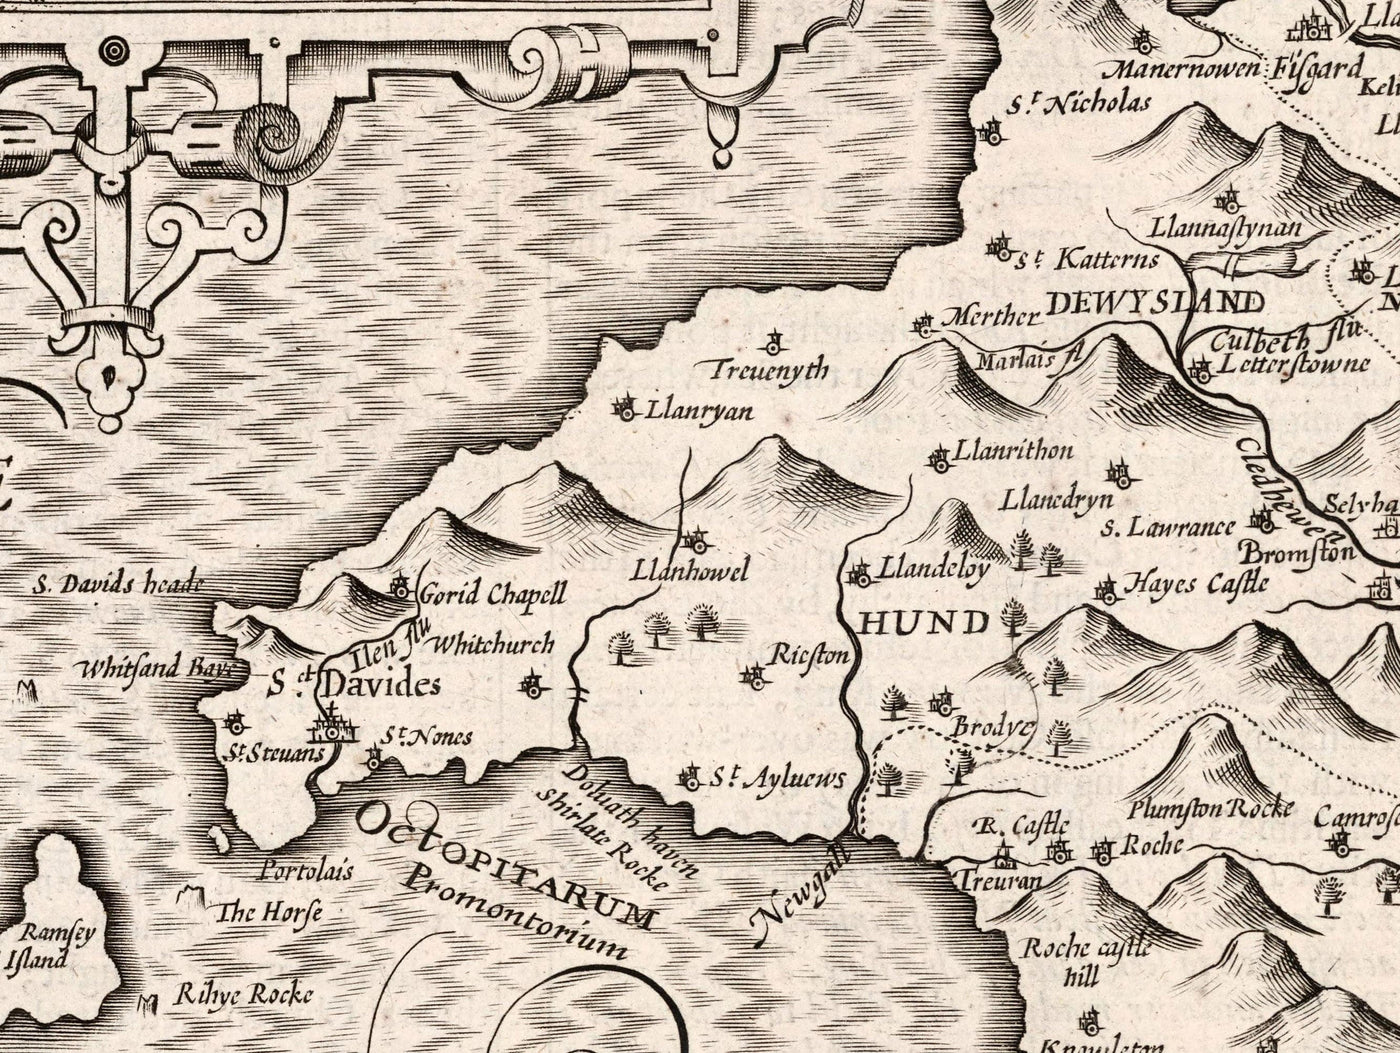 Old Monochrome Map of Pembrokeshire, Wales 1611 John Speed - Haverfordwest, St Davids, Fishguard, Southwest